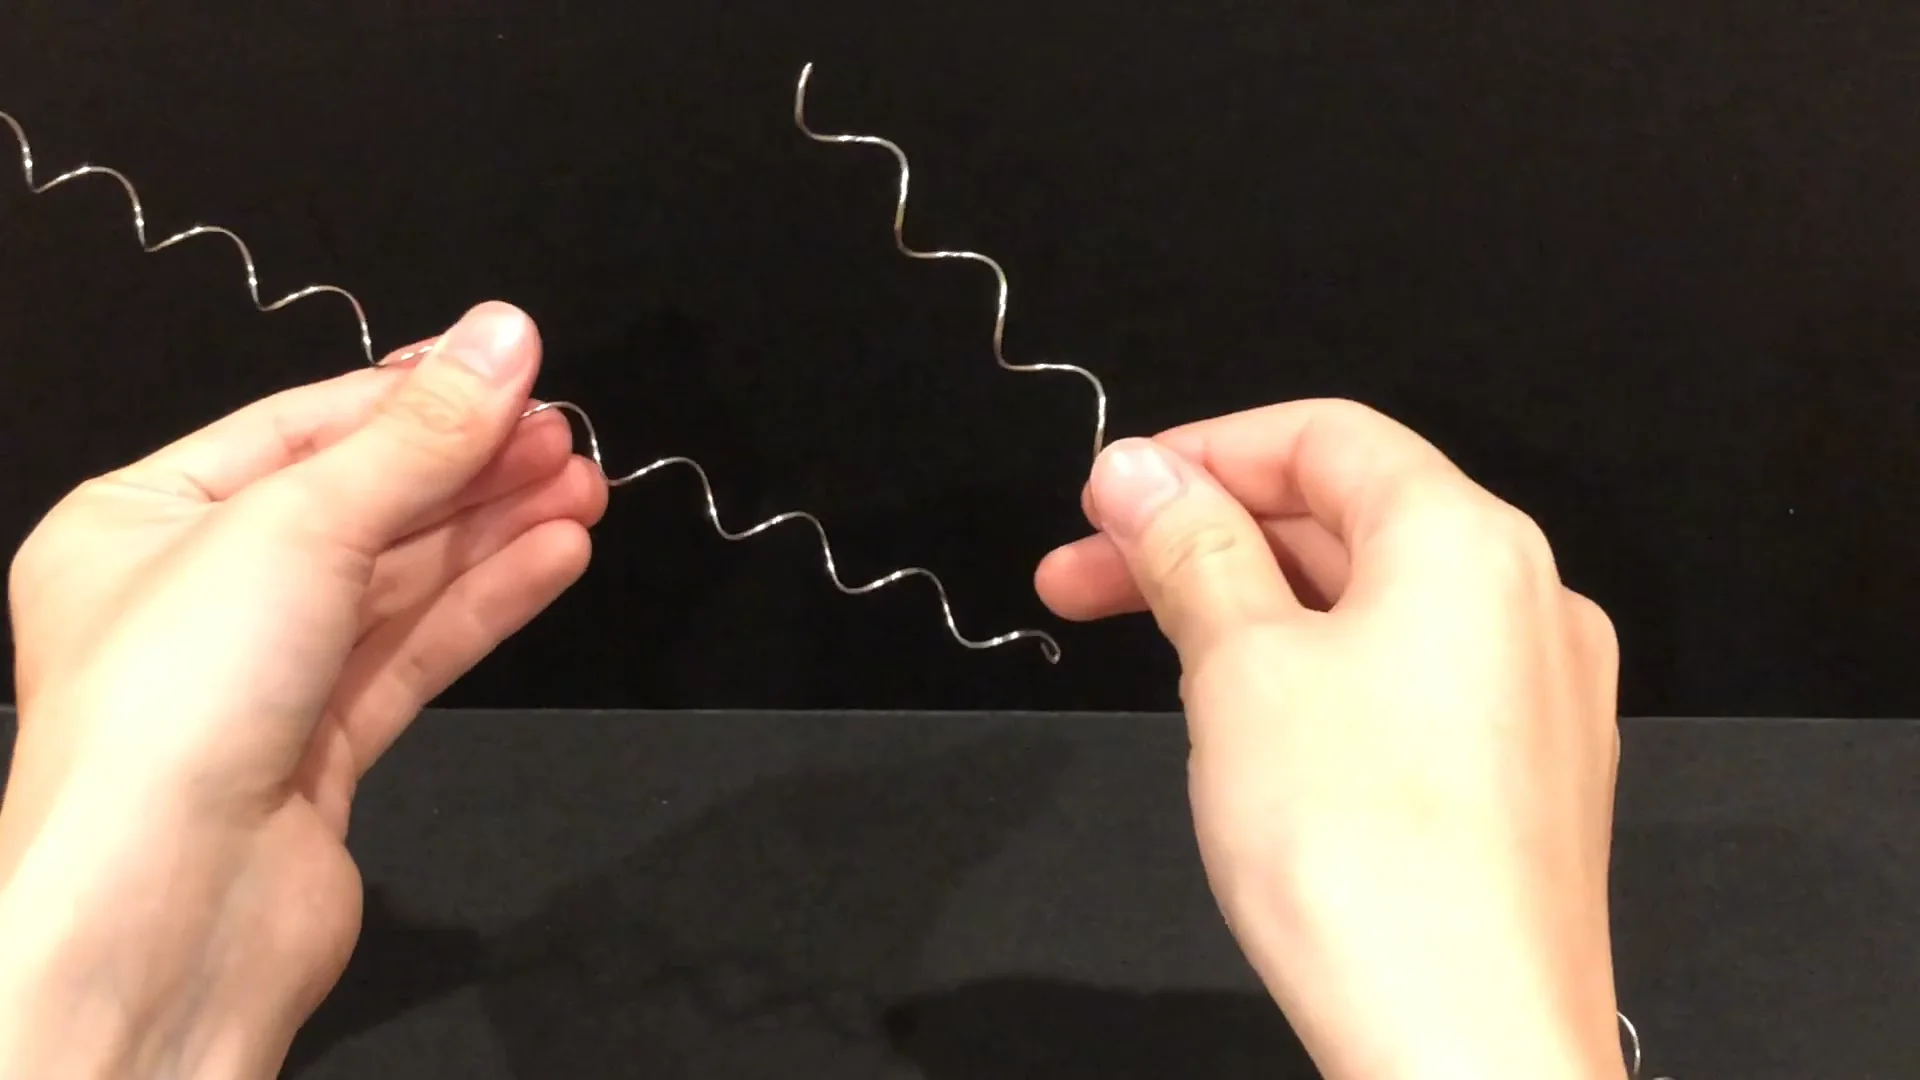 How to fix Wonder Wire on Vimeo